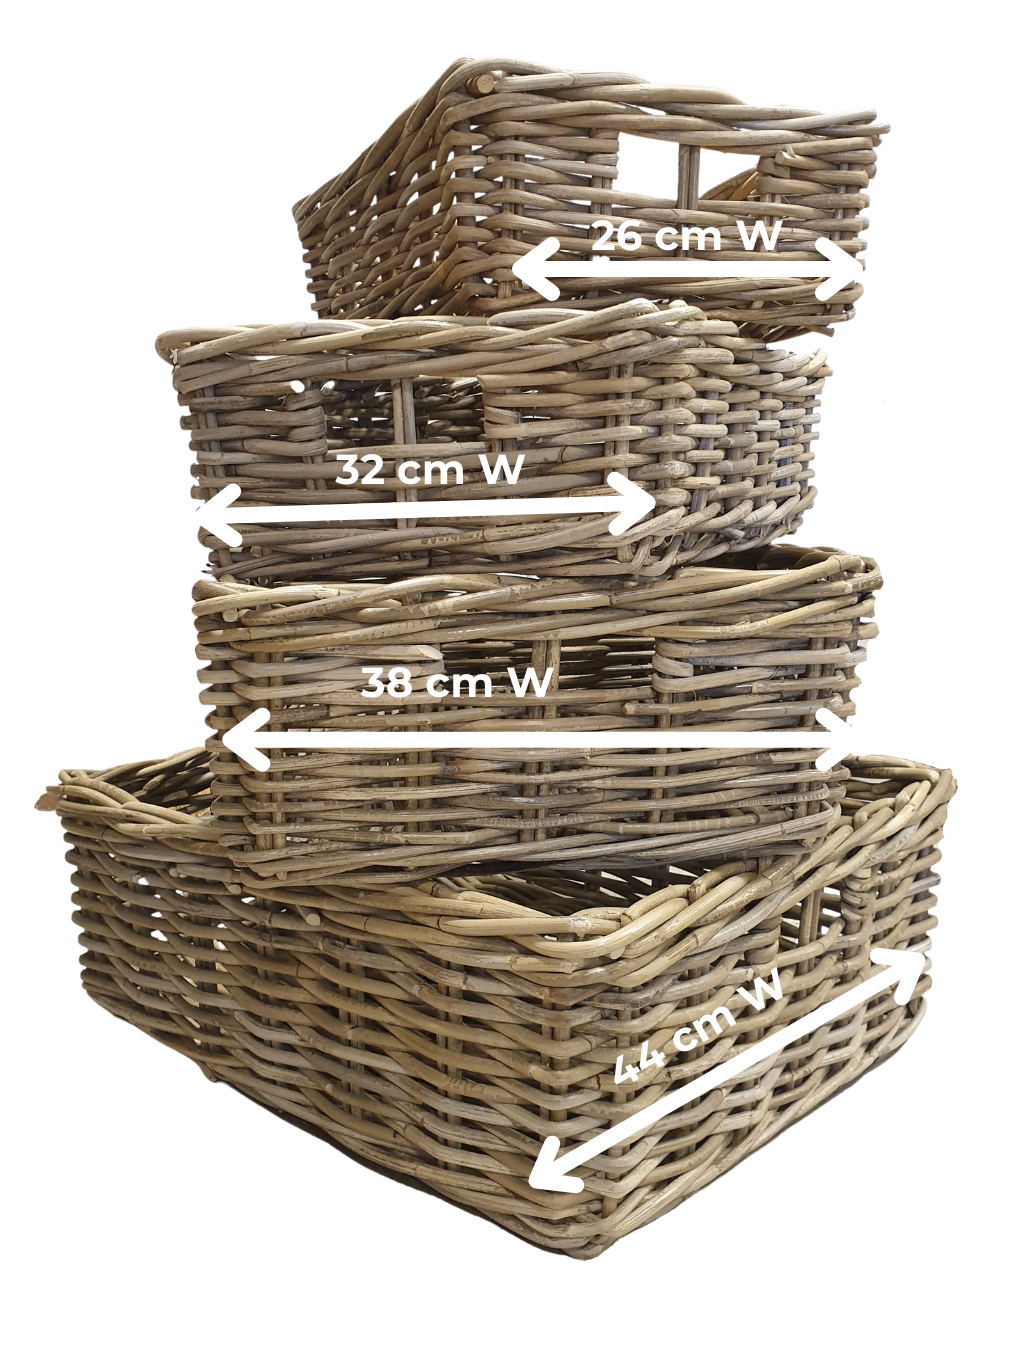 Kubu Storage Baskets | Regular